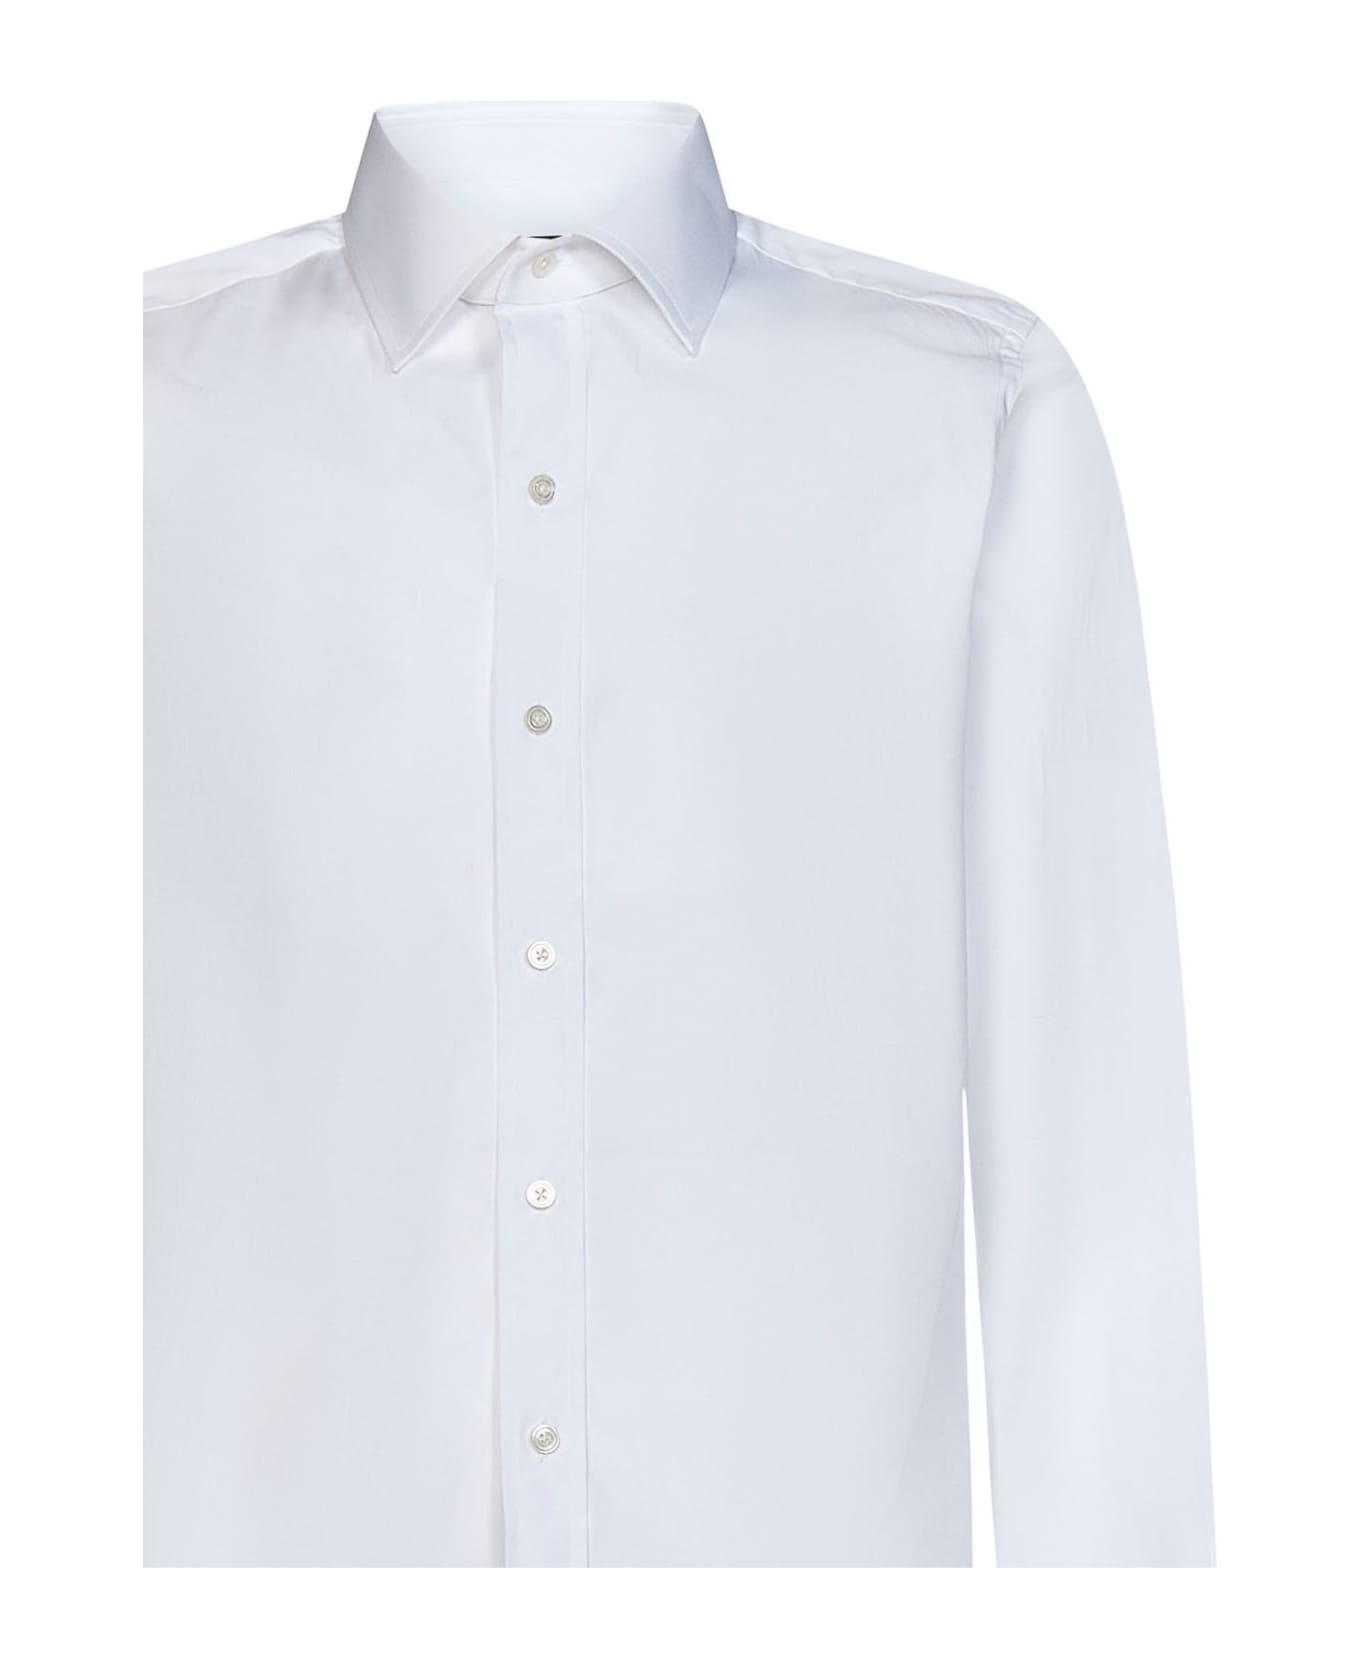 Tom Ford Shirt - White